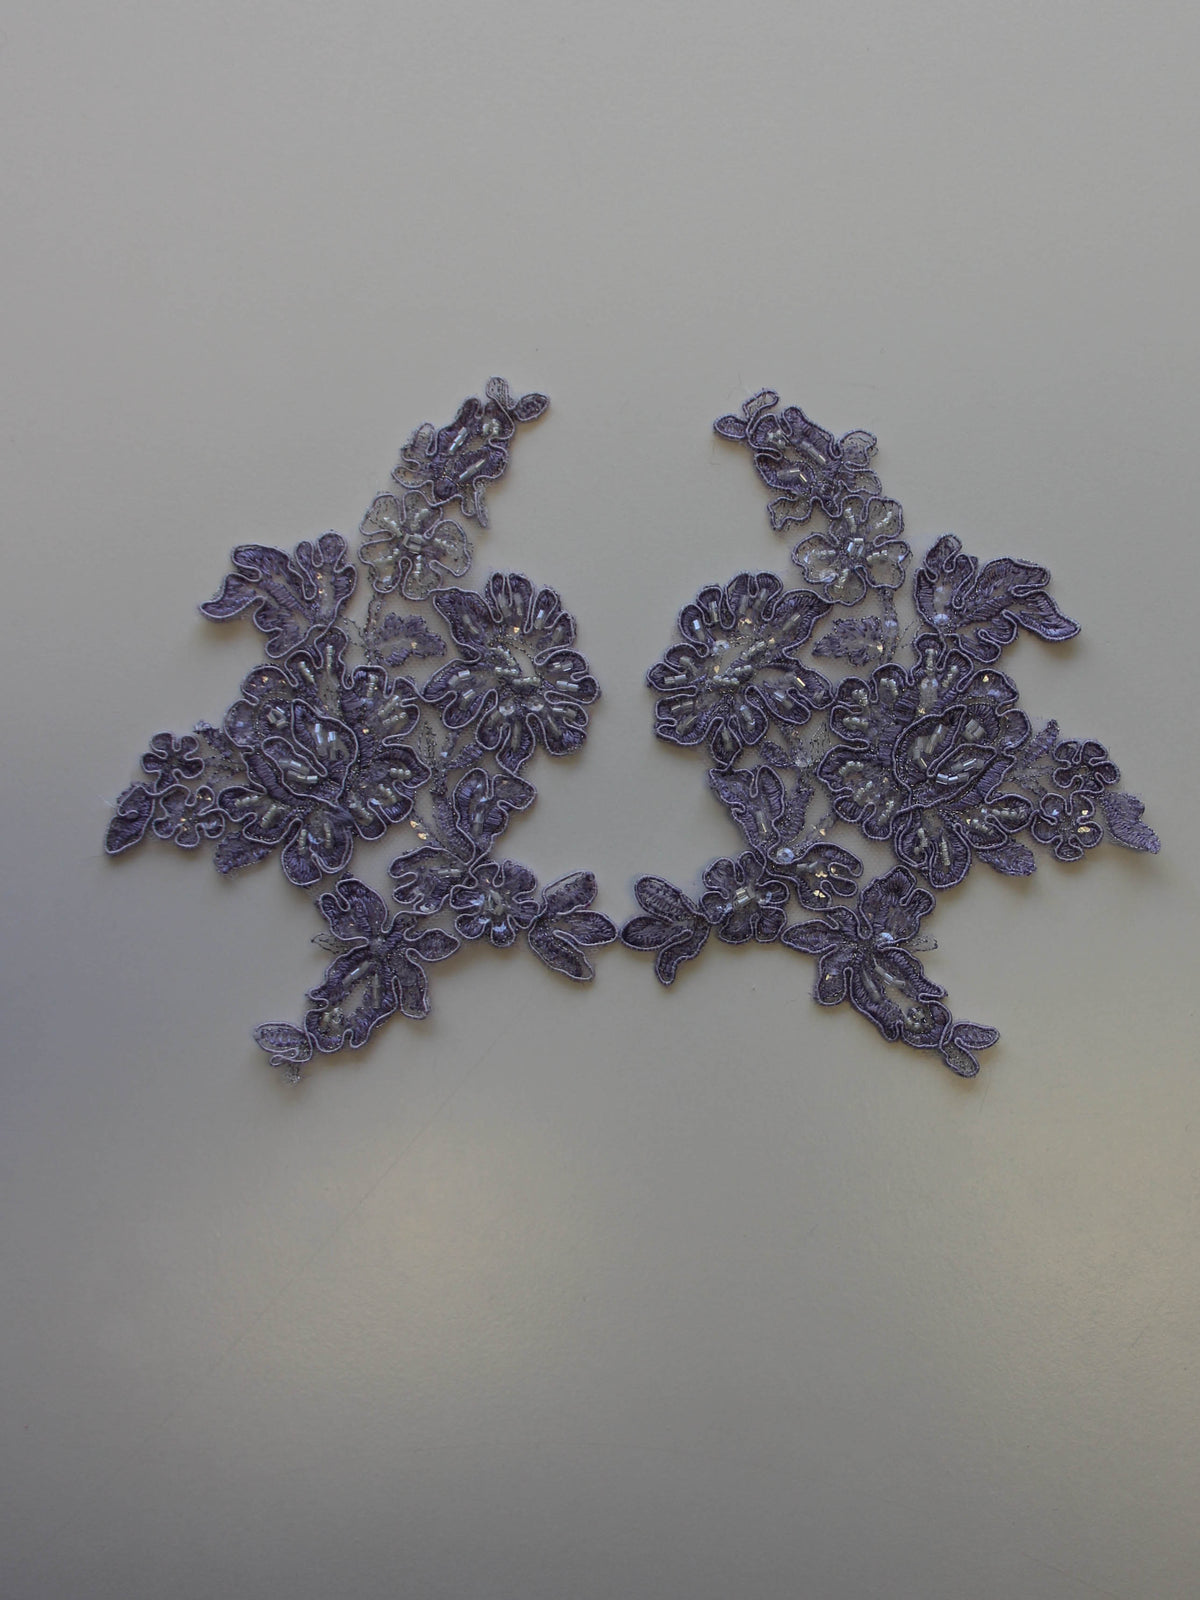 Lavender Beaded Lace Appliques - Victoria